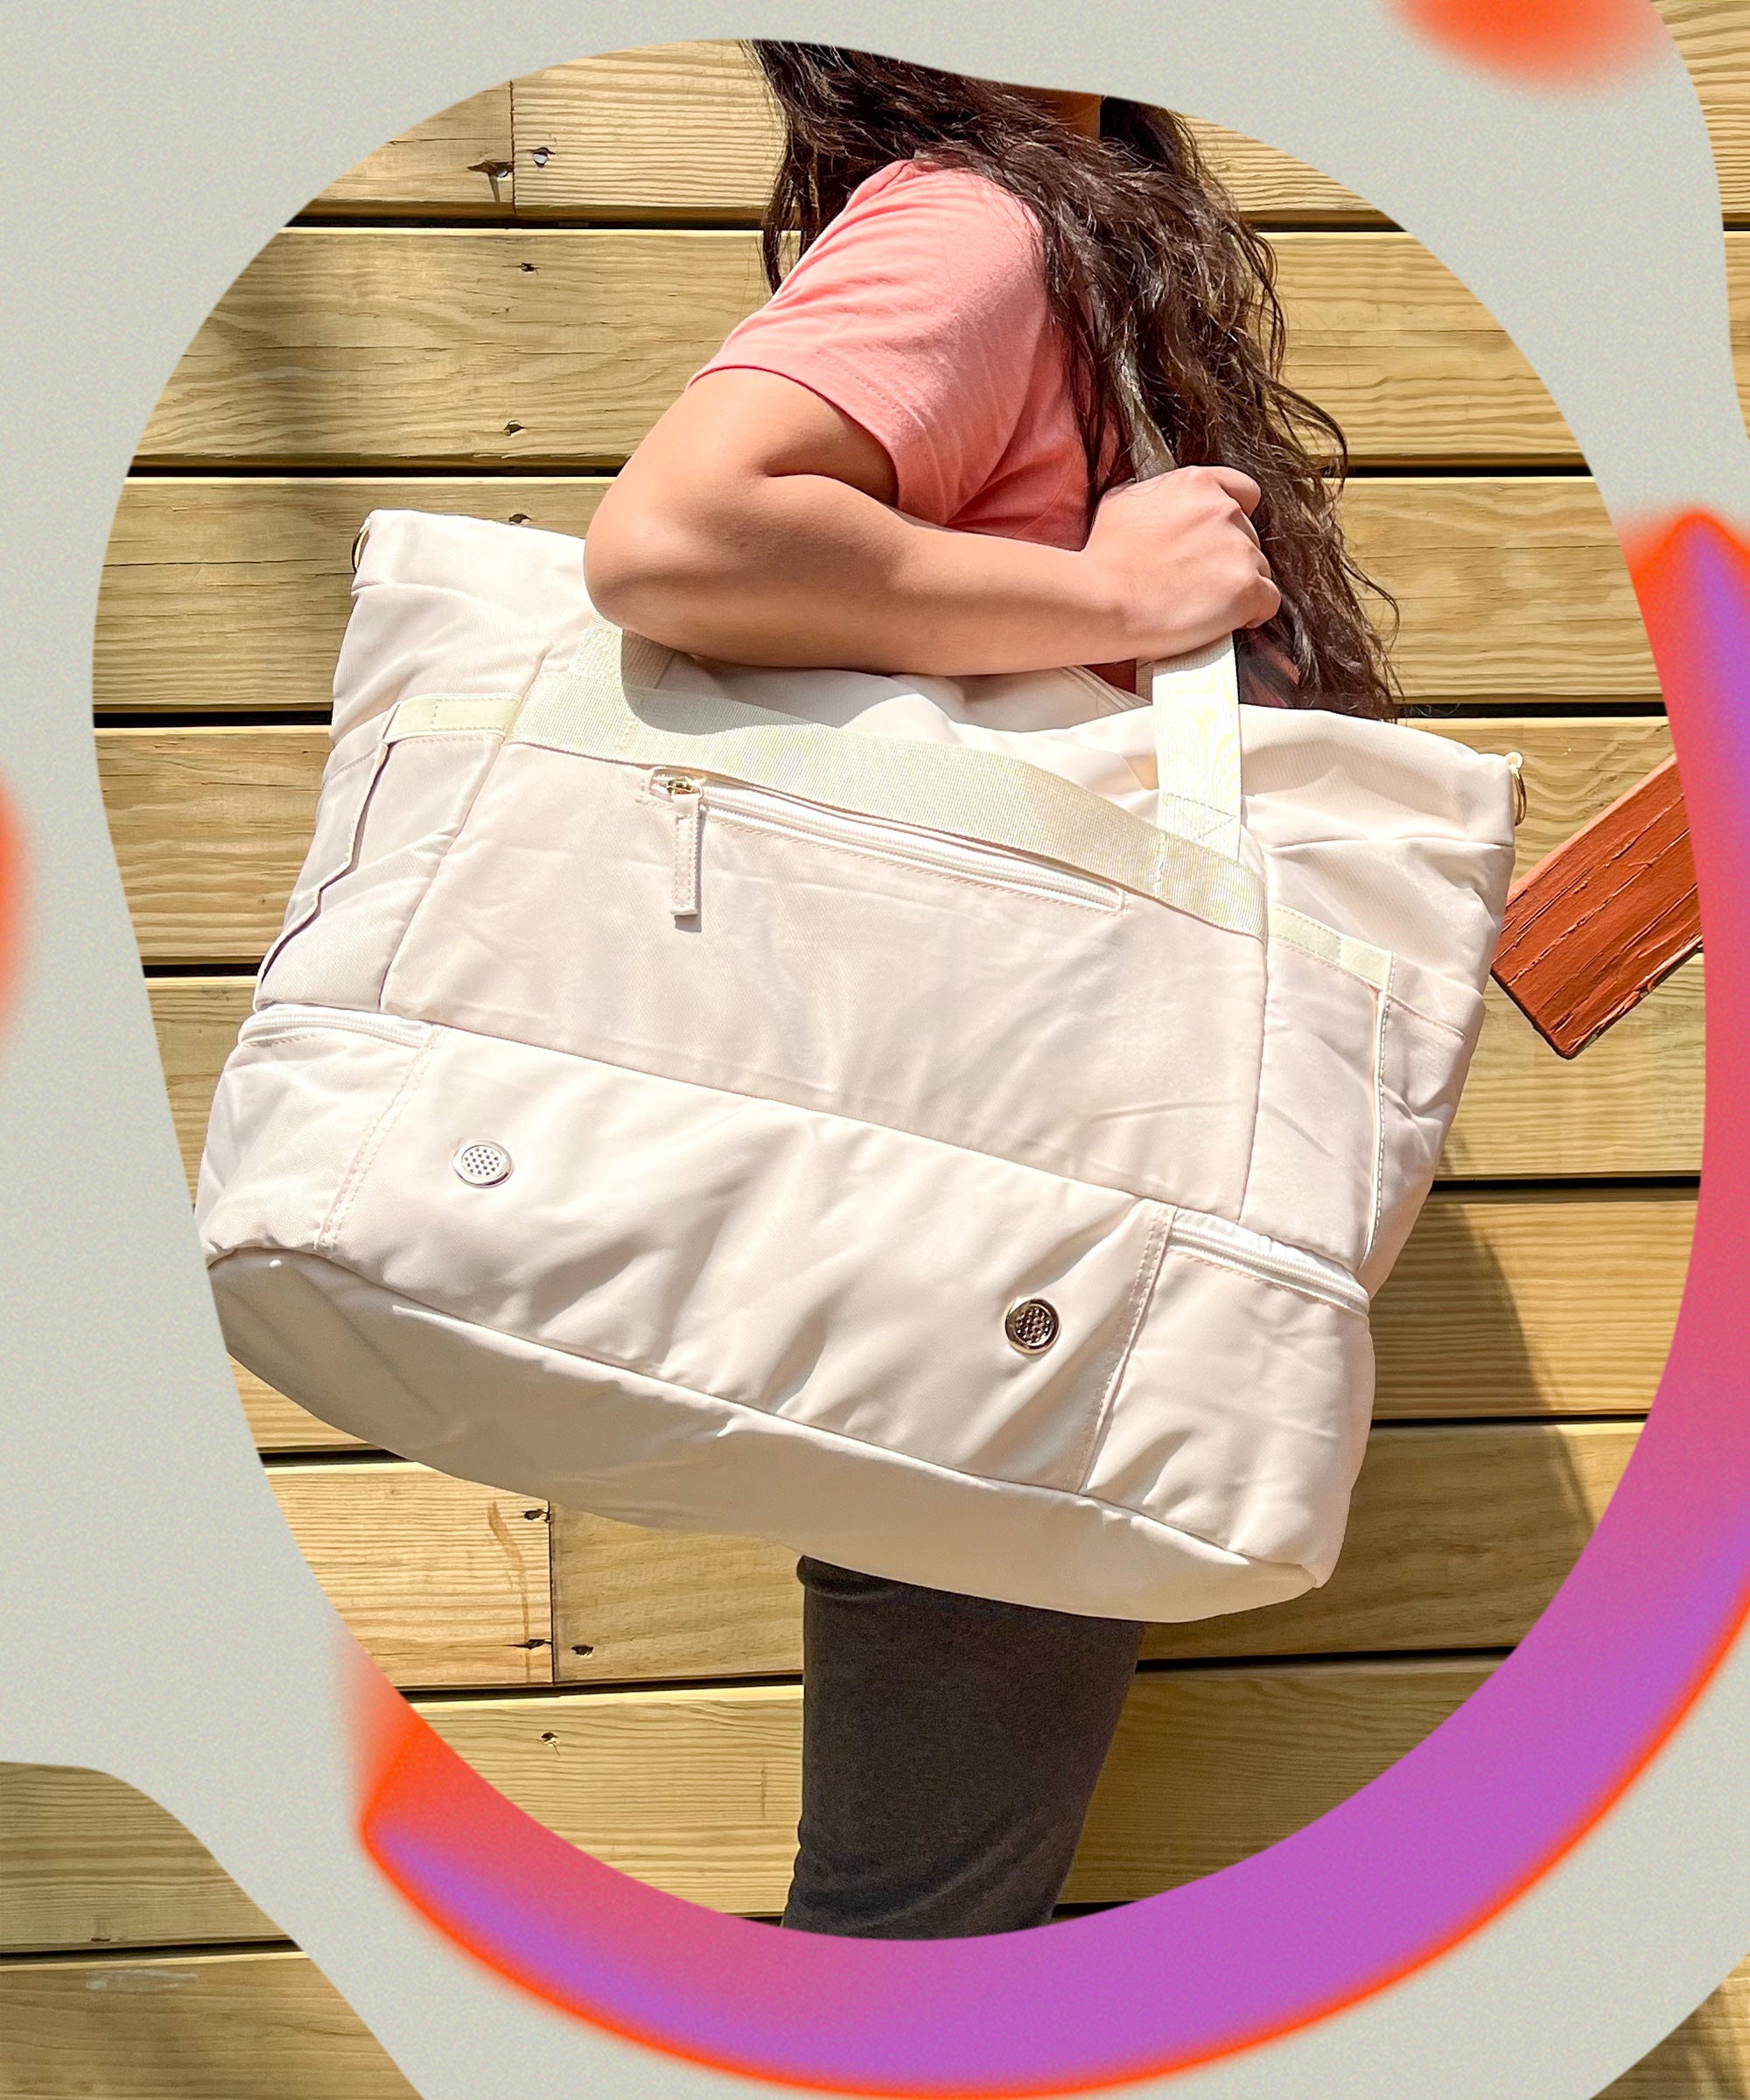 Tote Bag Organizer for Vanity PM Handbag Purse Organizer 